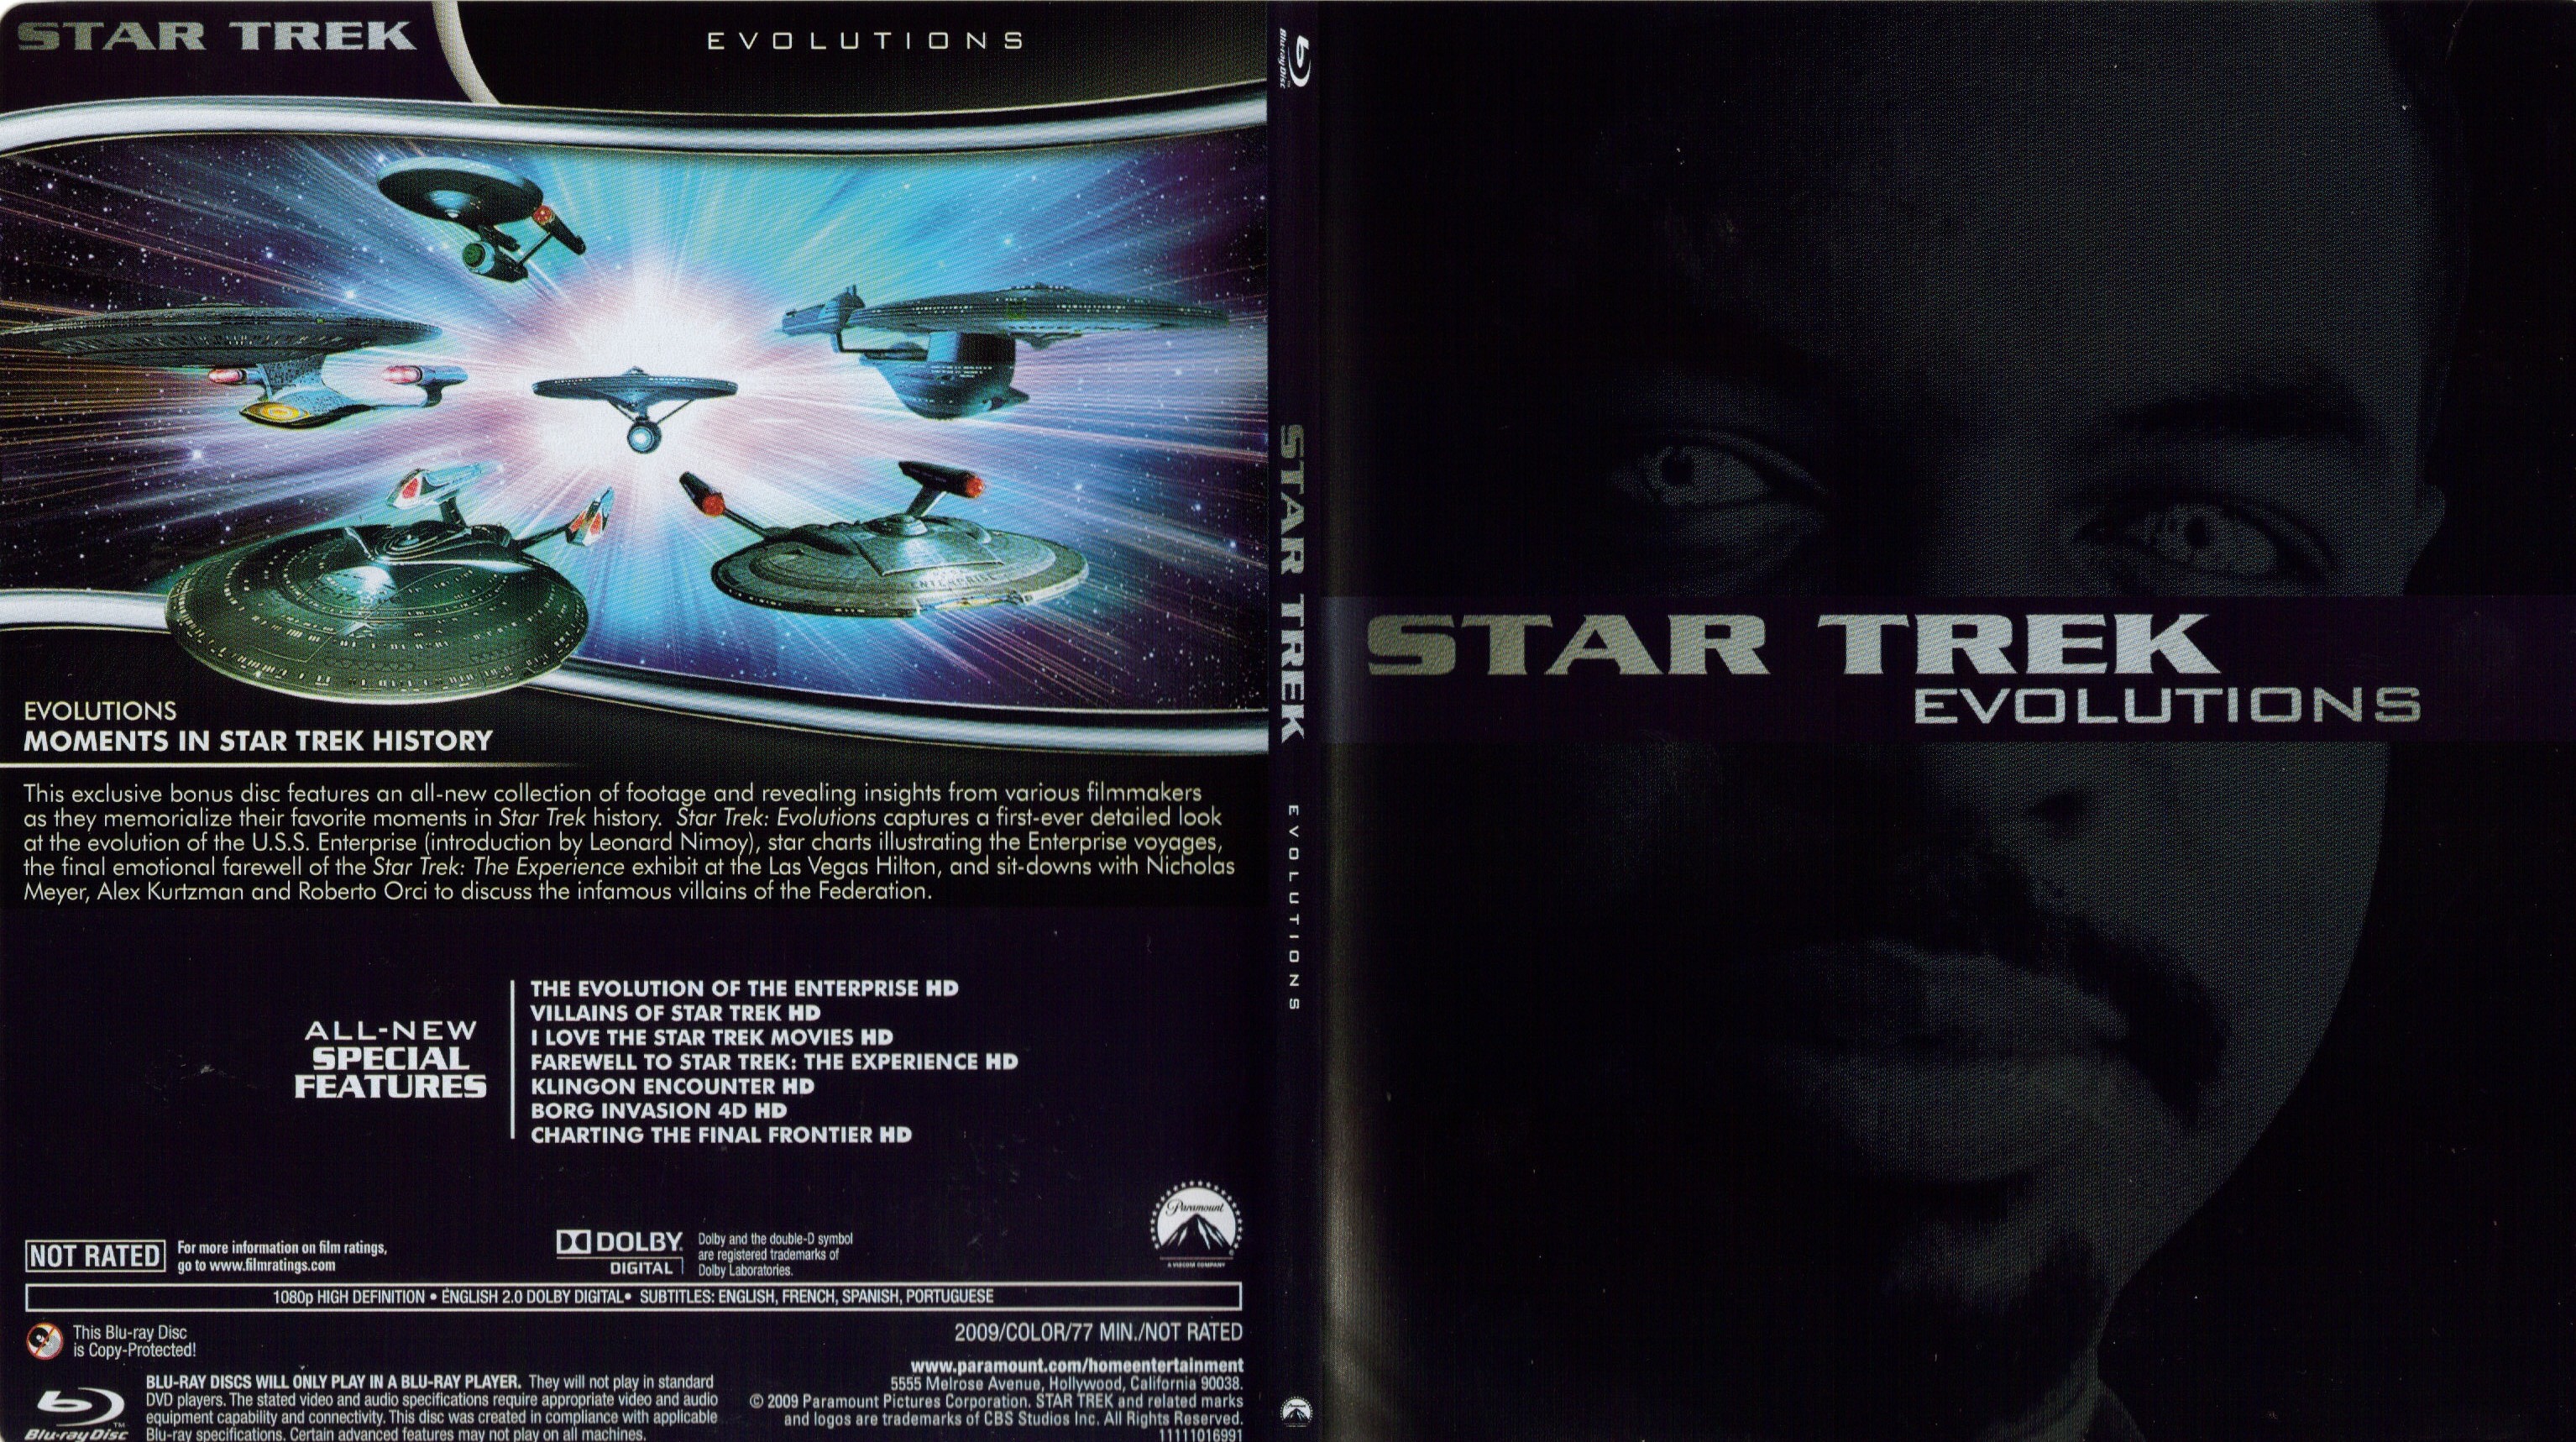 Jaquette DVD Star Trek - Evolutions - SLIM Zone 1 (BLU-RAY)